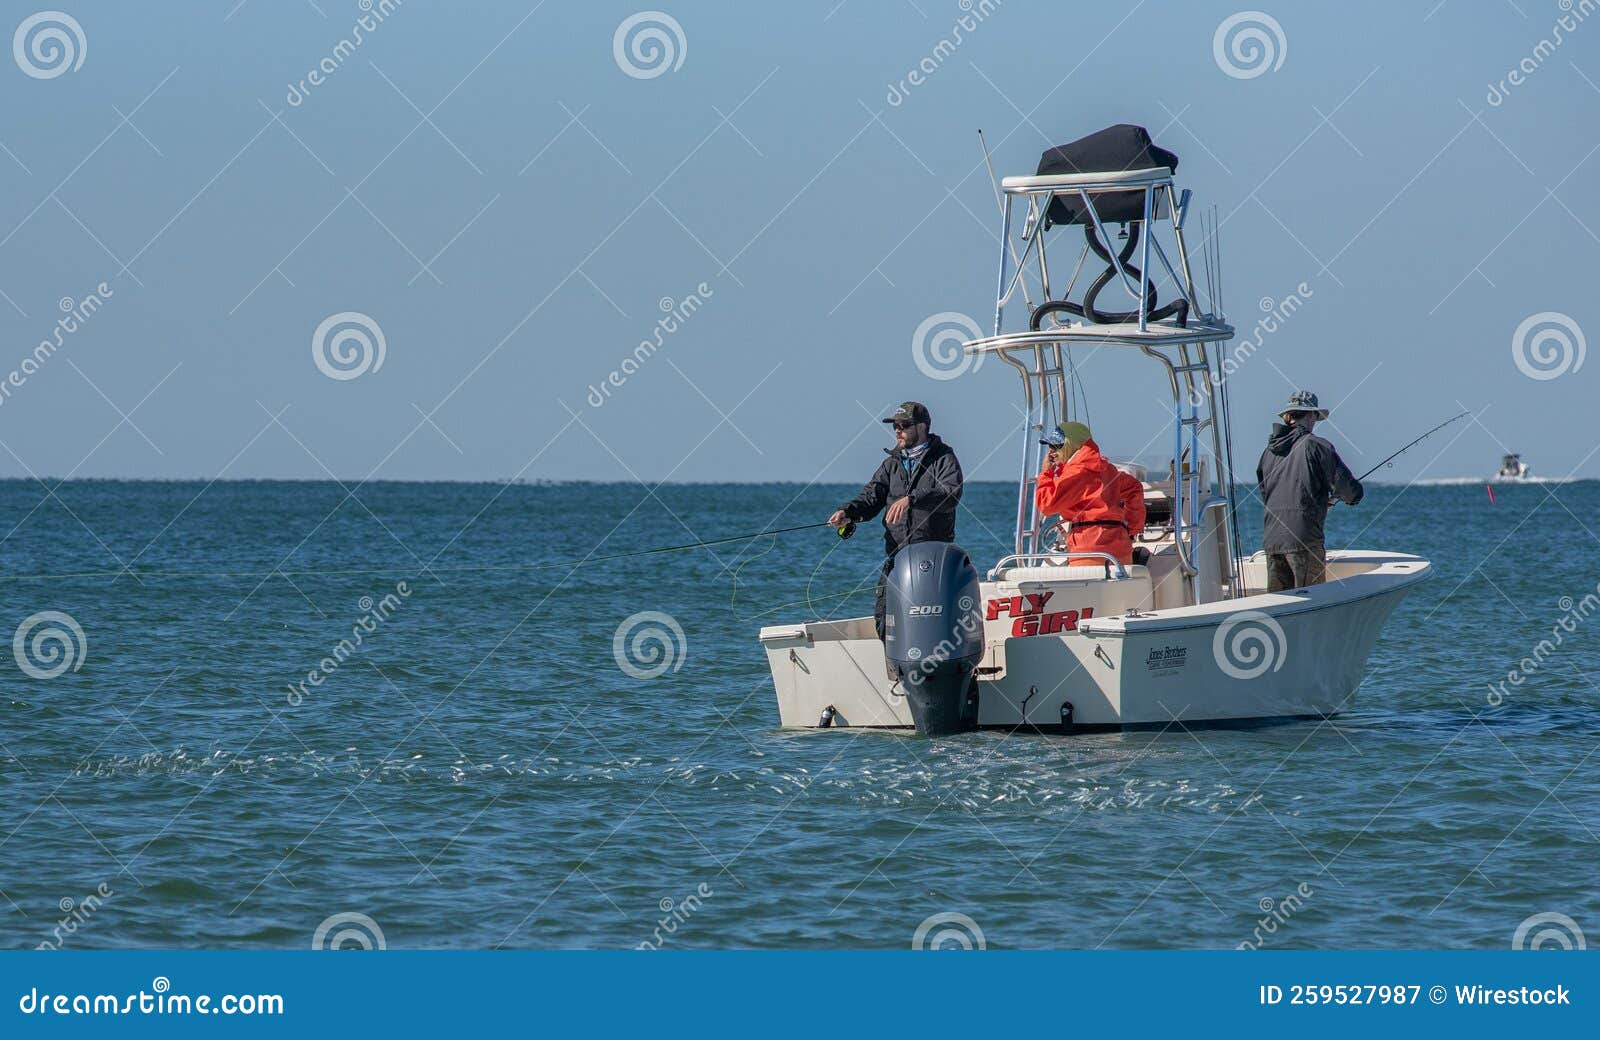 https://thumbs.dreamstime.com/z/group-men-boat-fly-fishing-false-albacore-cape-lookout-group-men-boat-fly-fishing-false-albacore-259527987.jpg